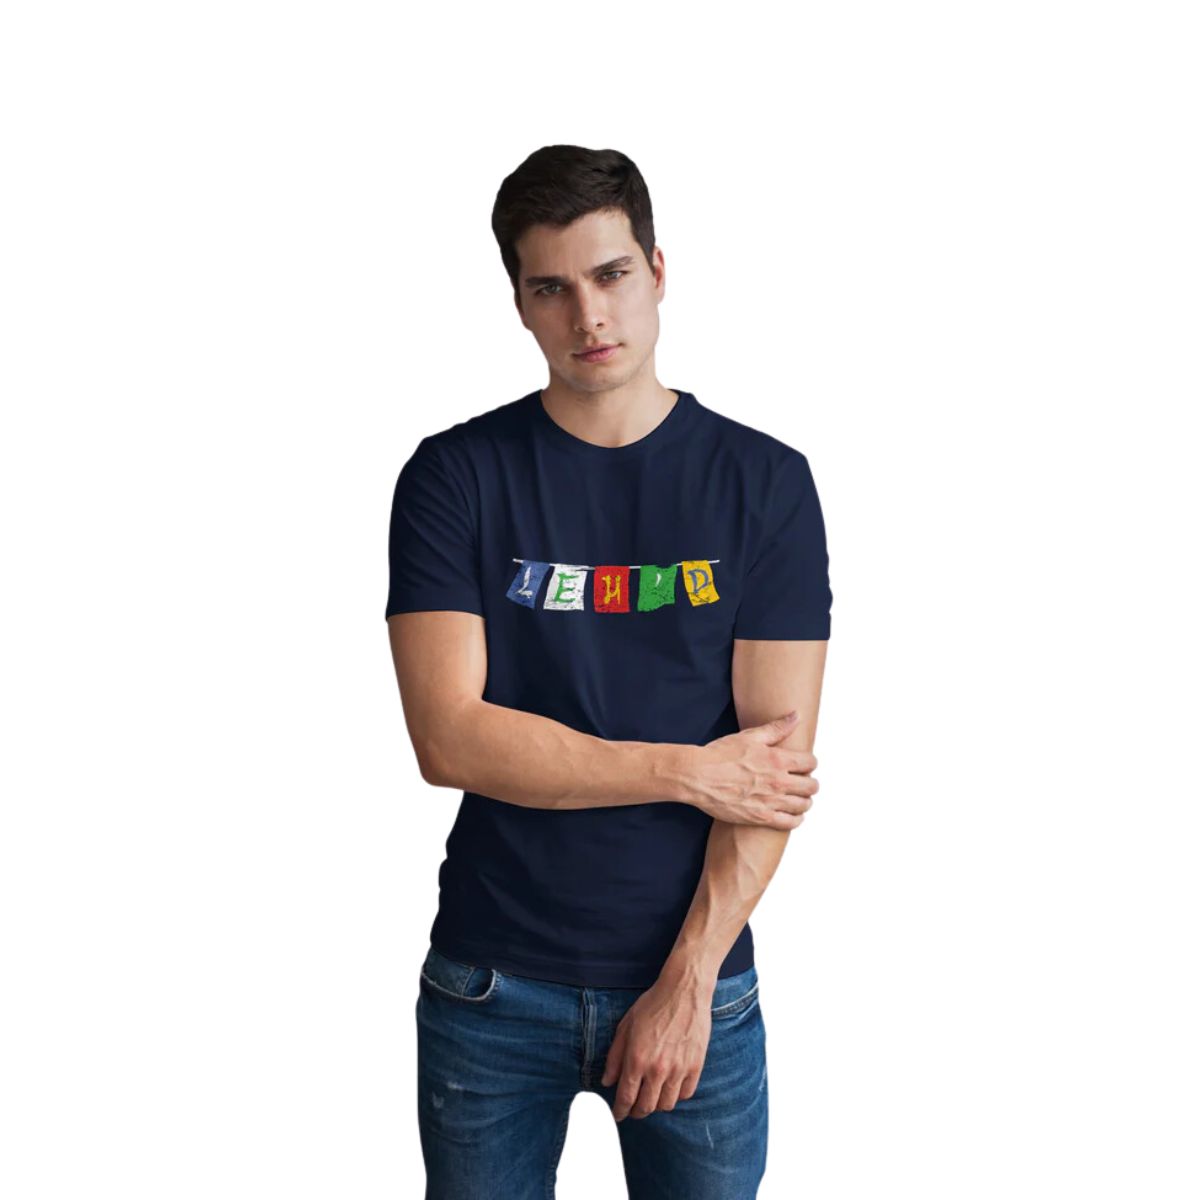 Leh'd T-Shirt - Unisex 1